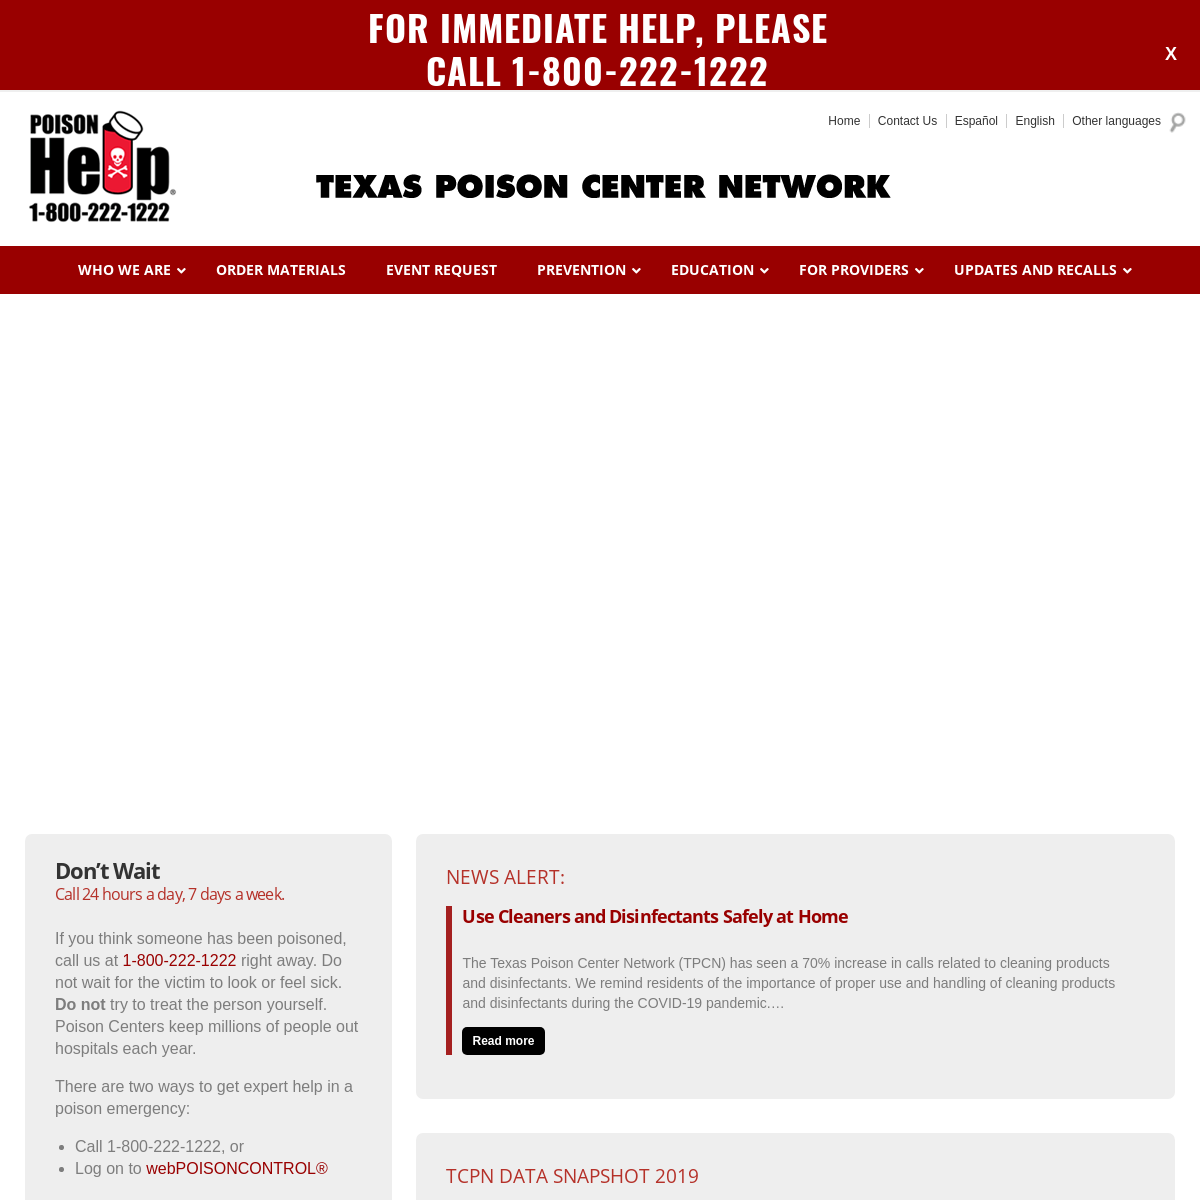 Texas Poison Center Network